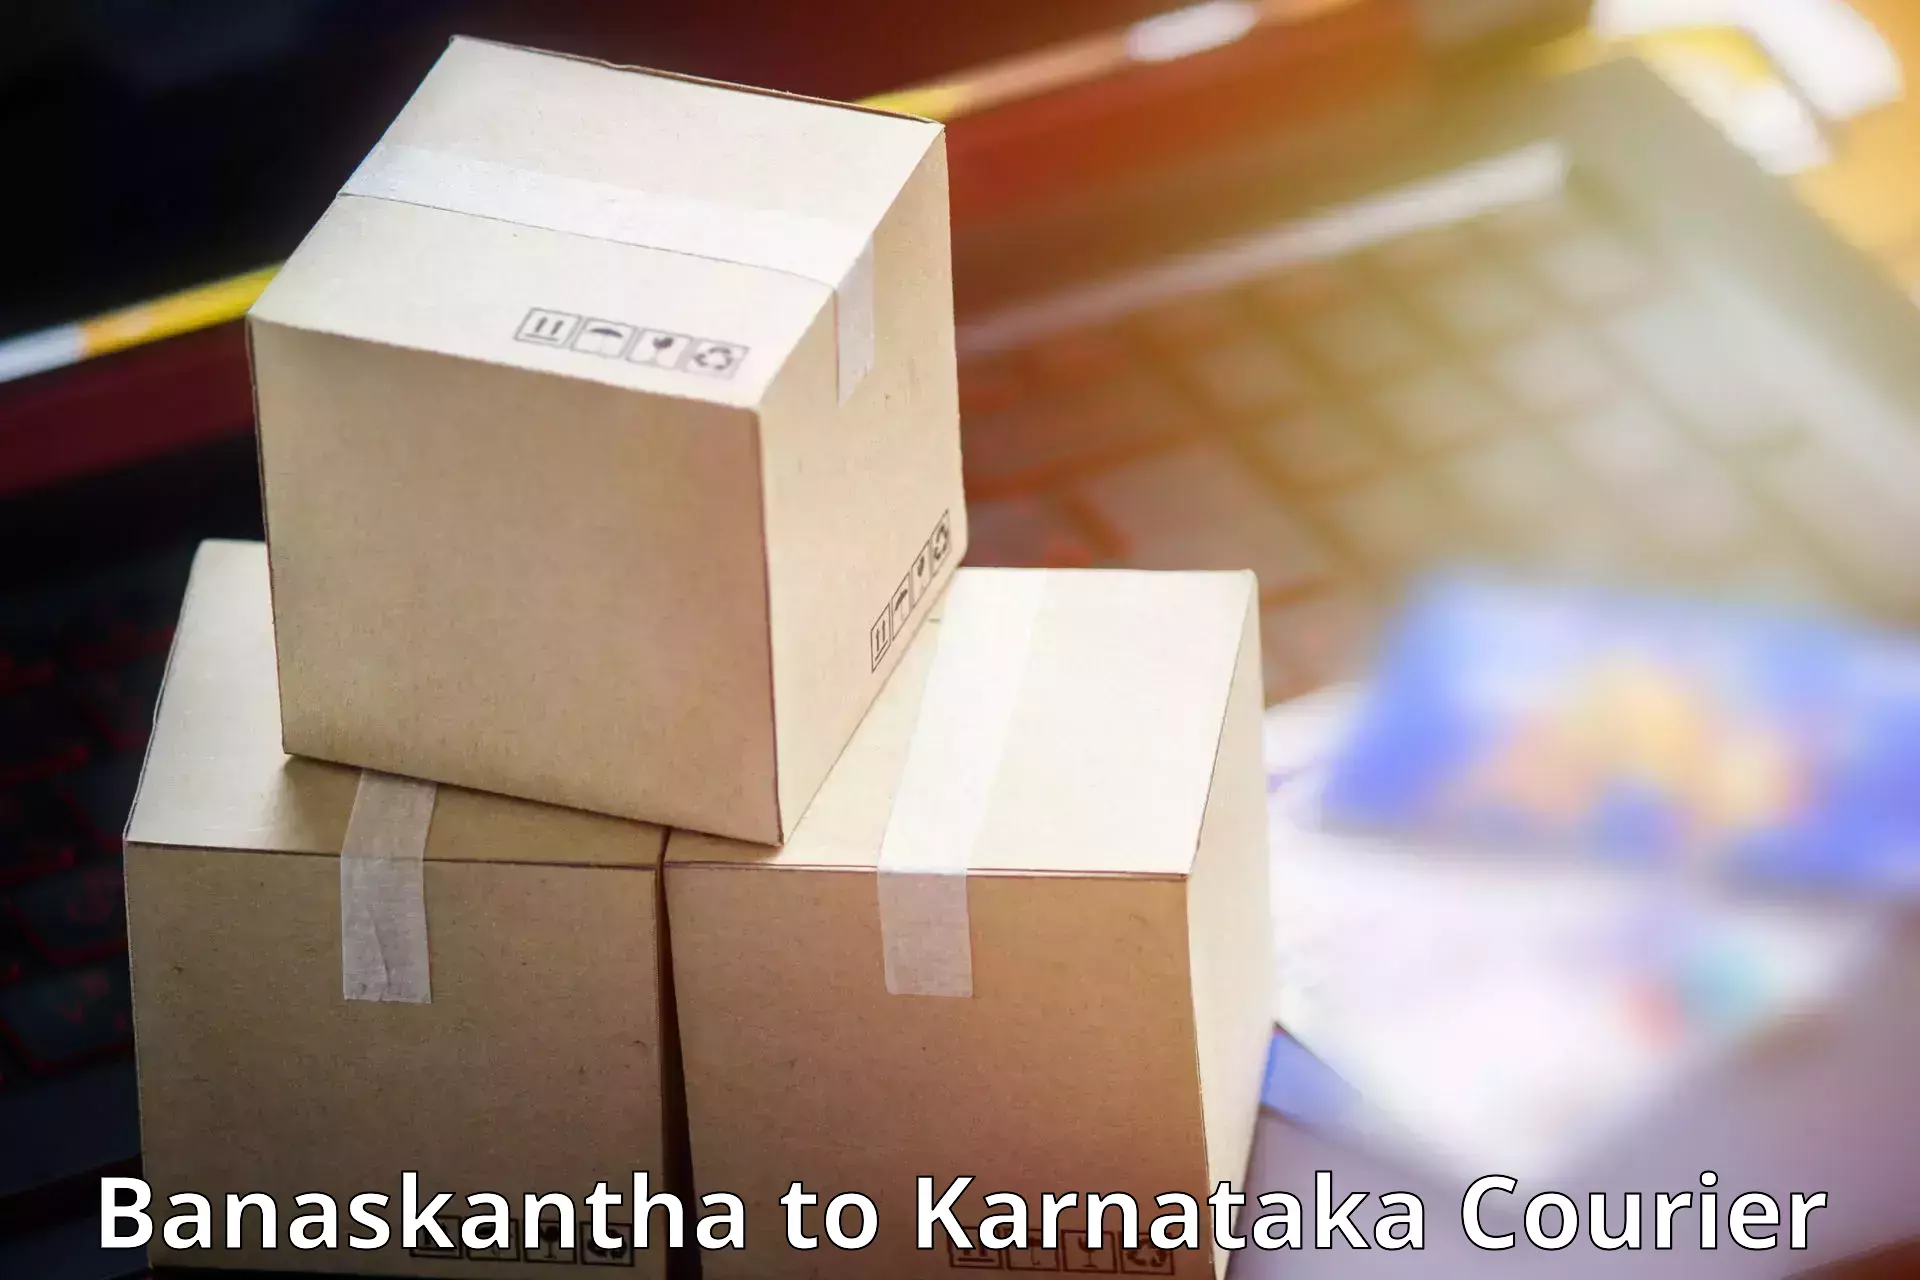 24/7 courier service in Banaskantha to Aland Kalaburagi